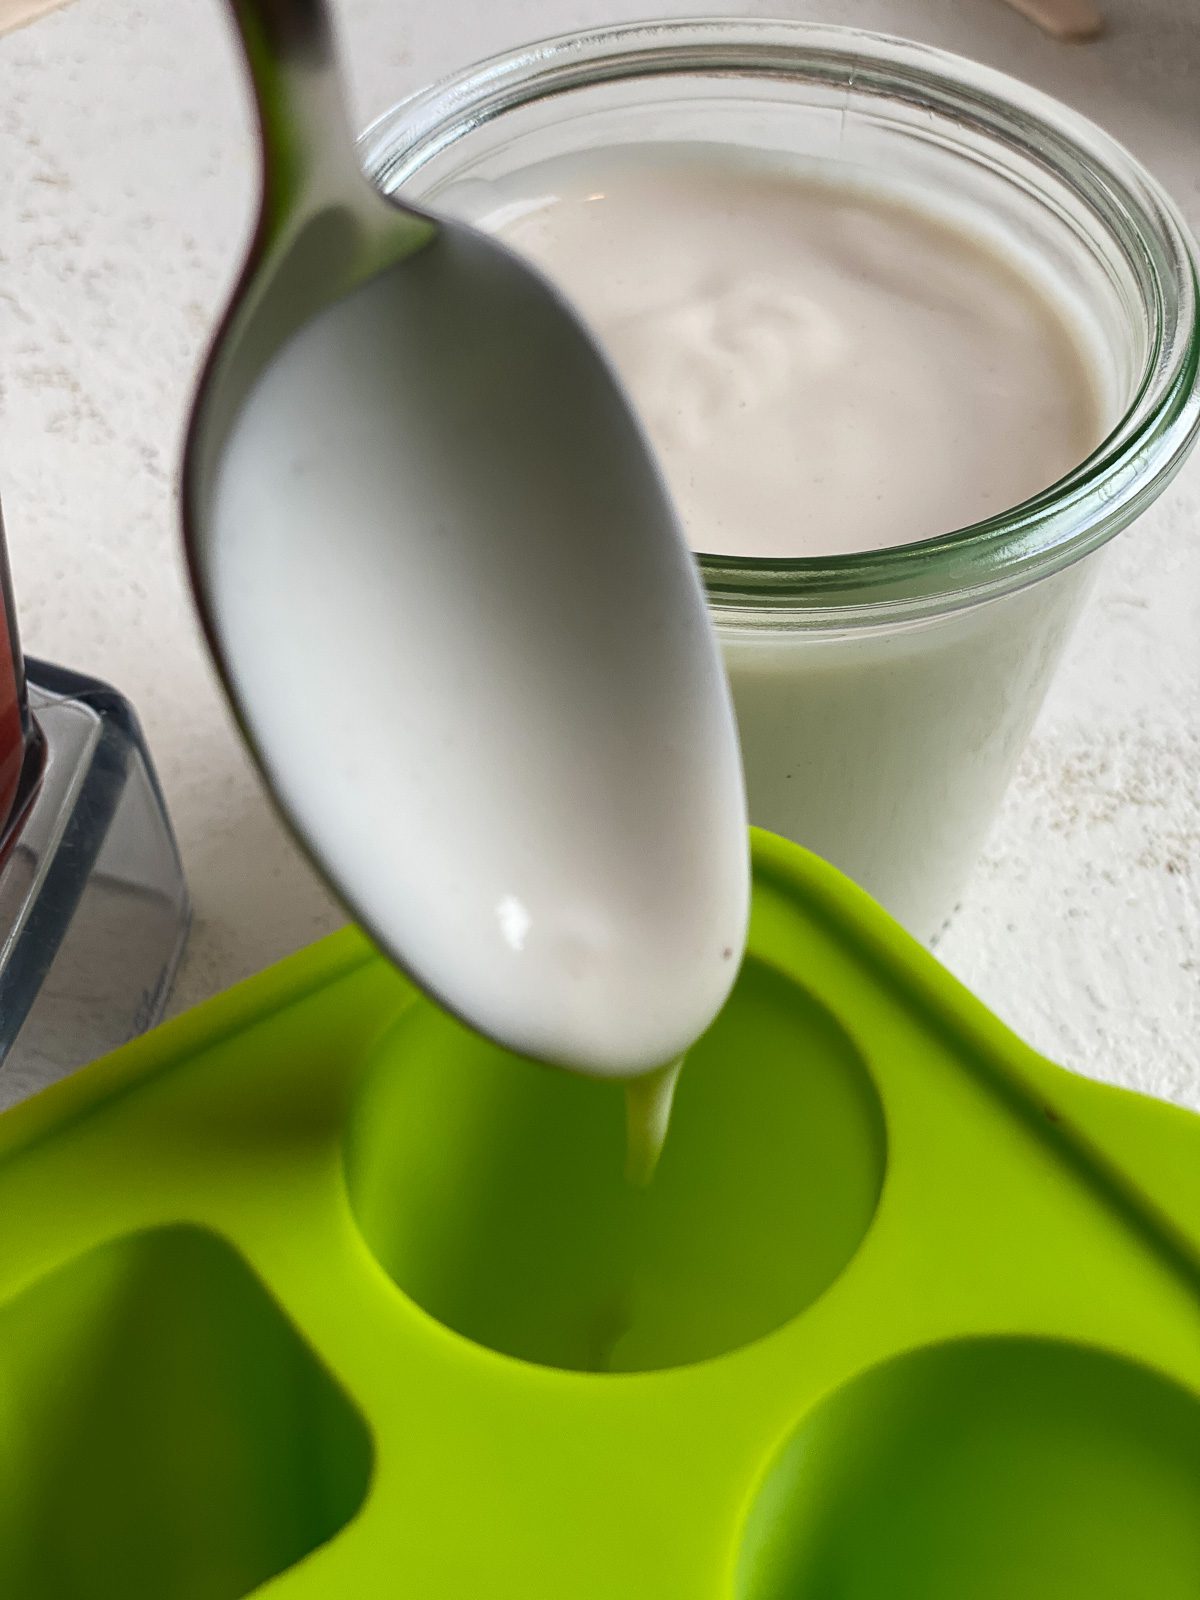 process of adding vegan yogurt to popsicle mold